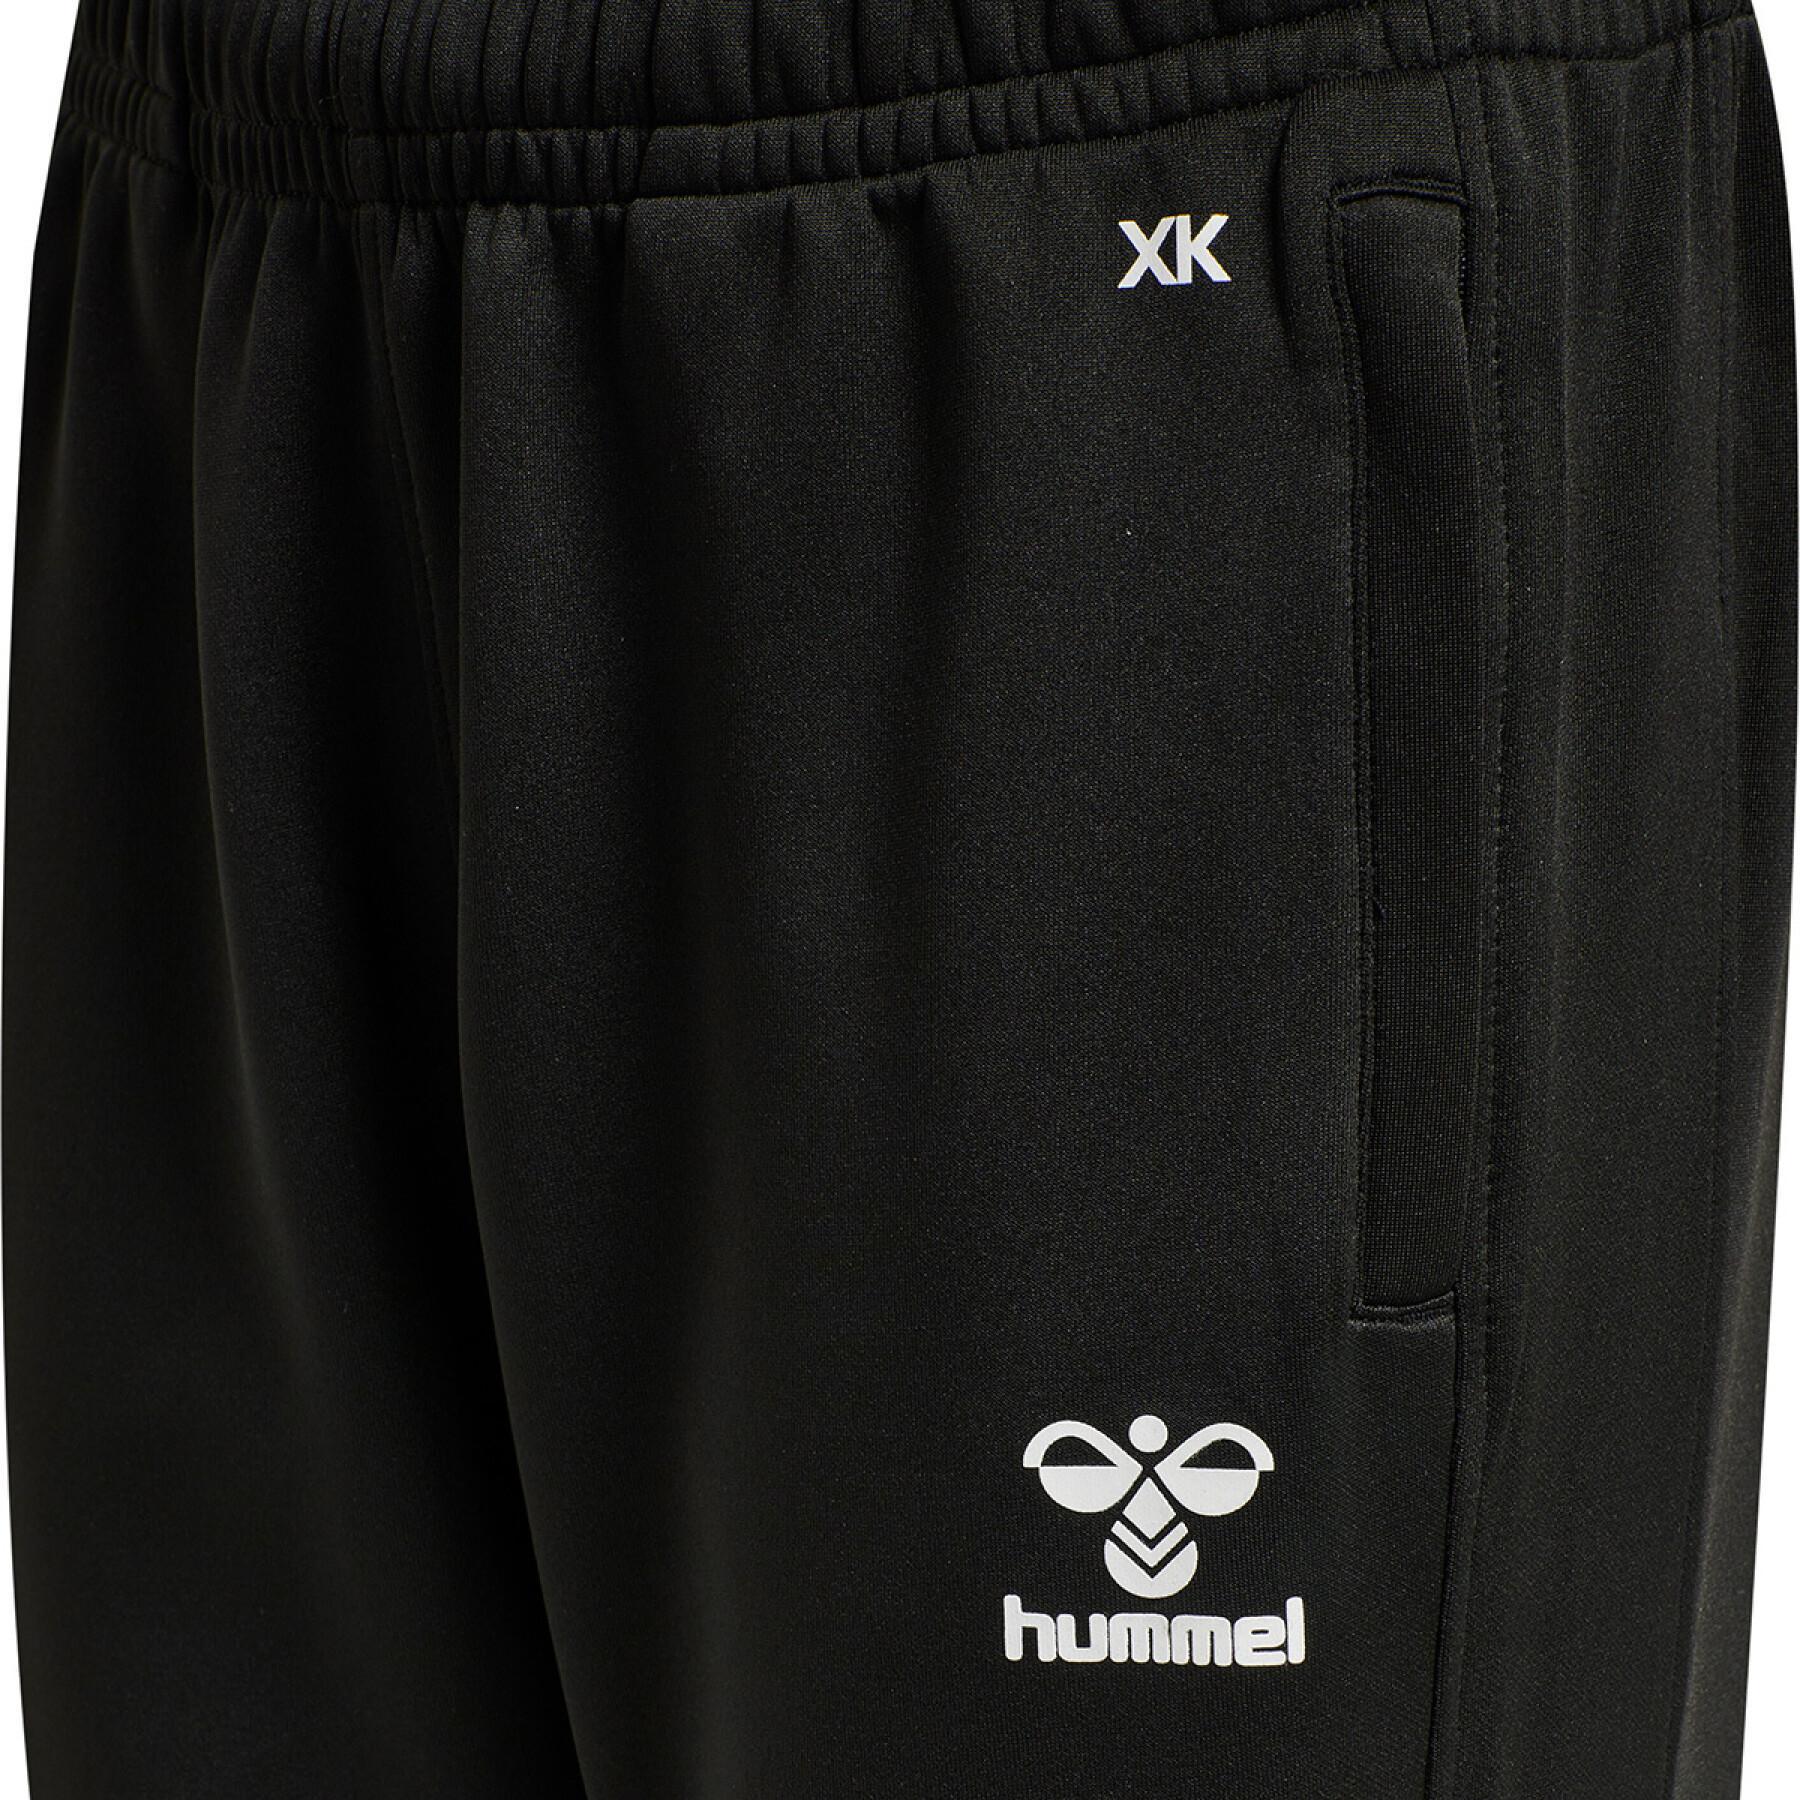 Pantalones de deporte para niños Hummel hmlcore xk poly